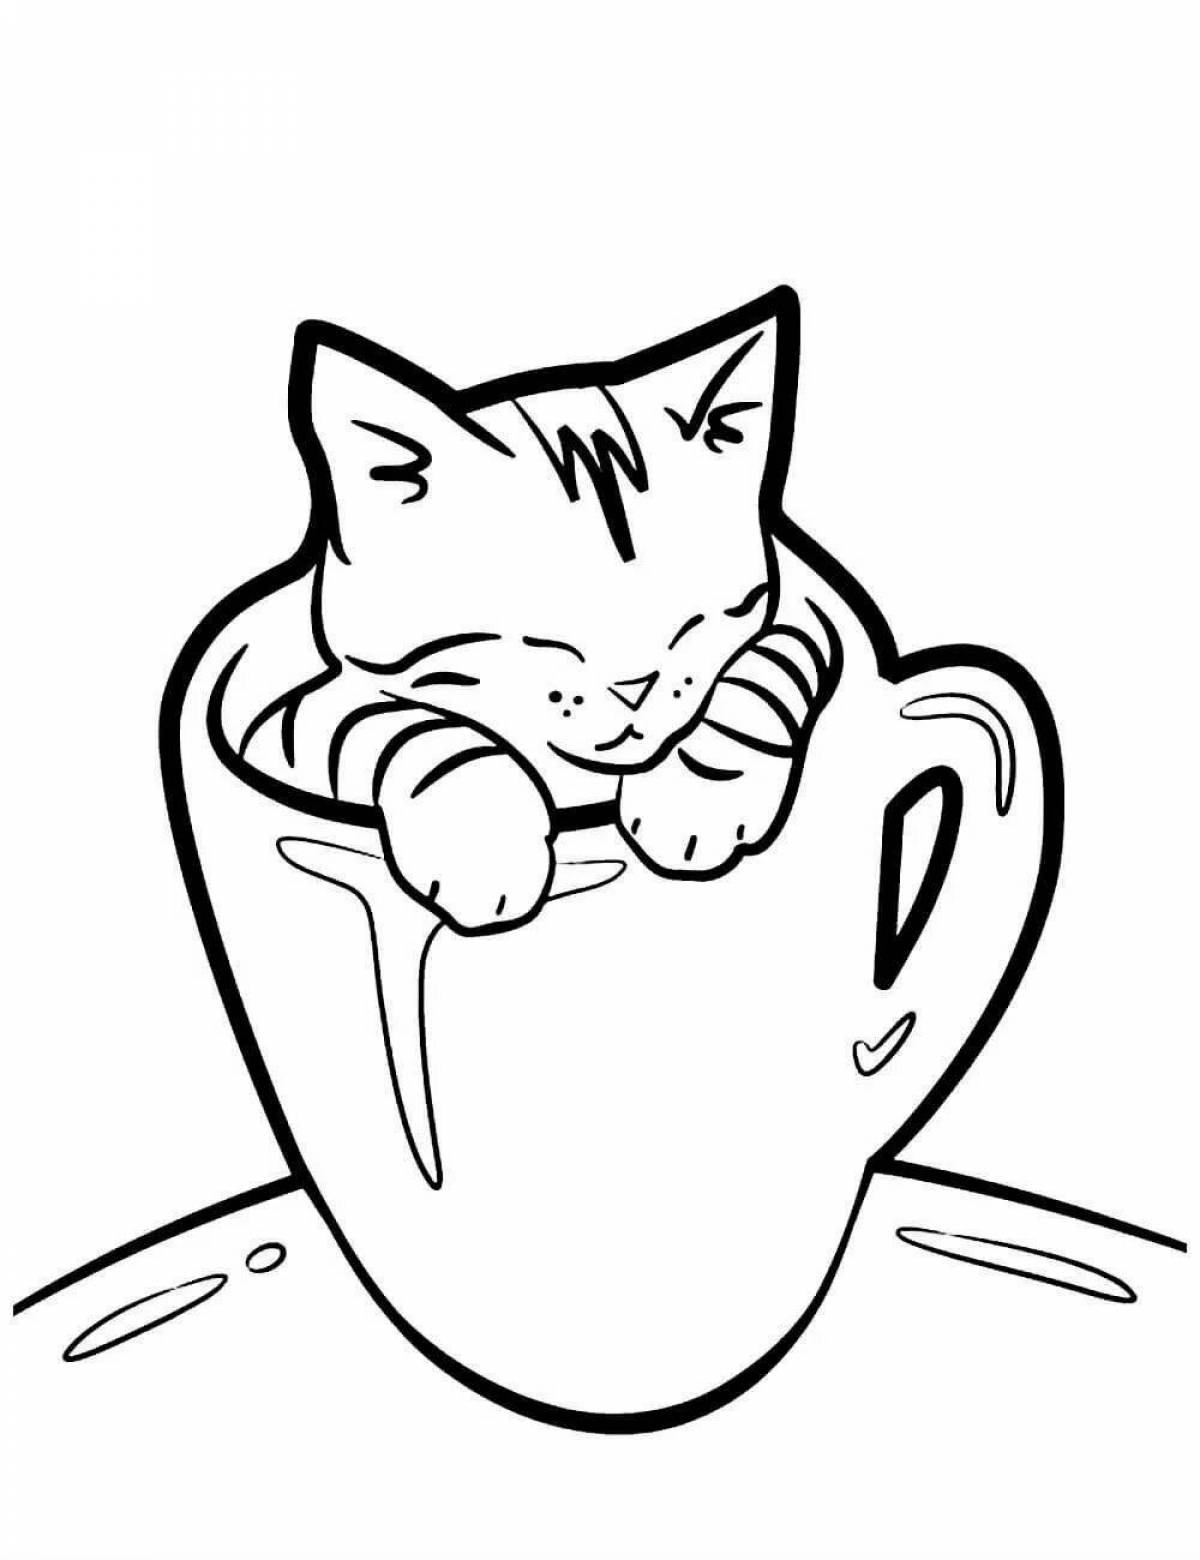 Cute kitten in a mug coloring book